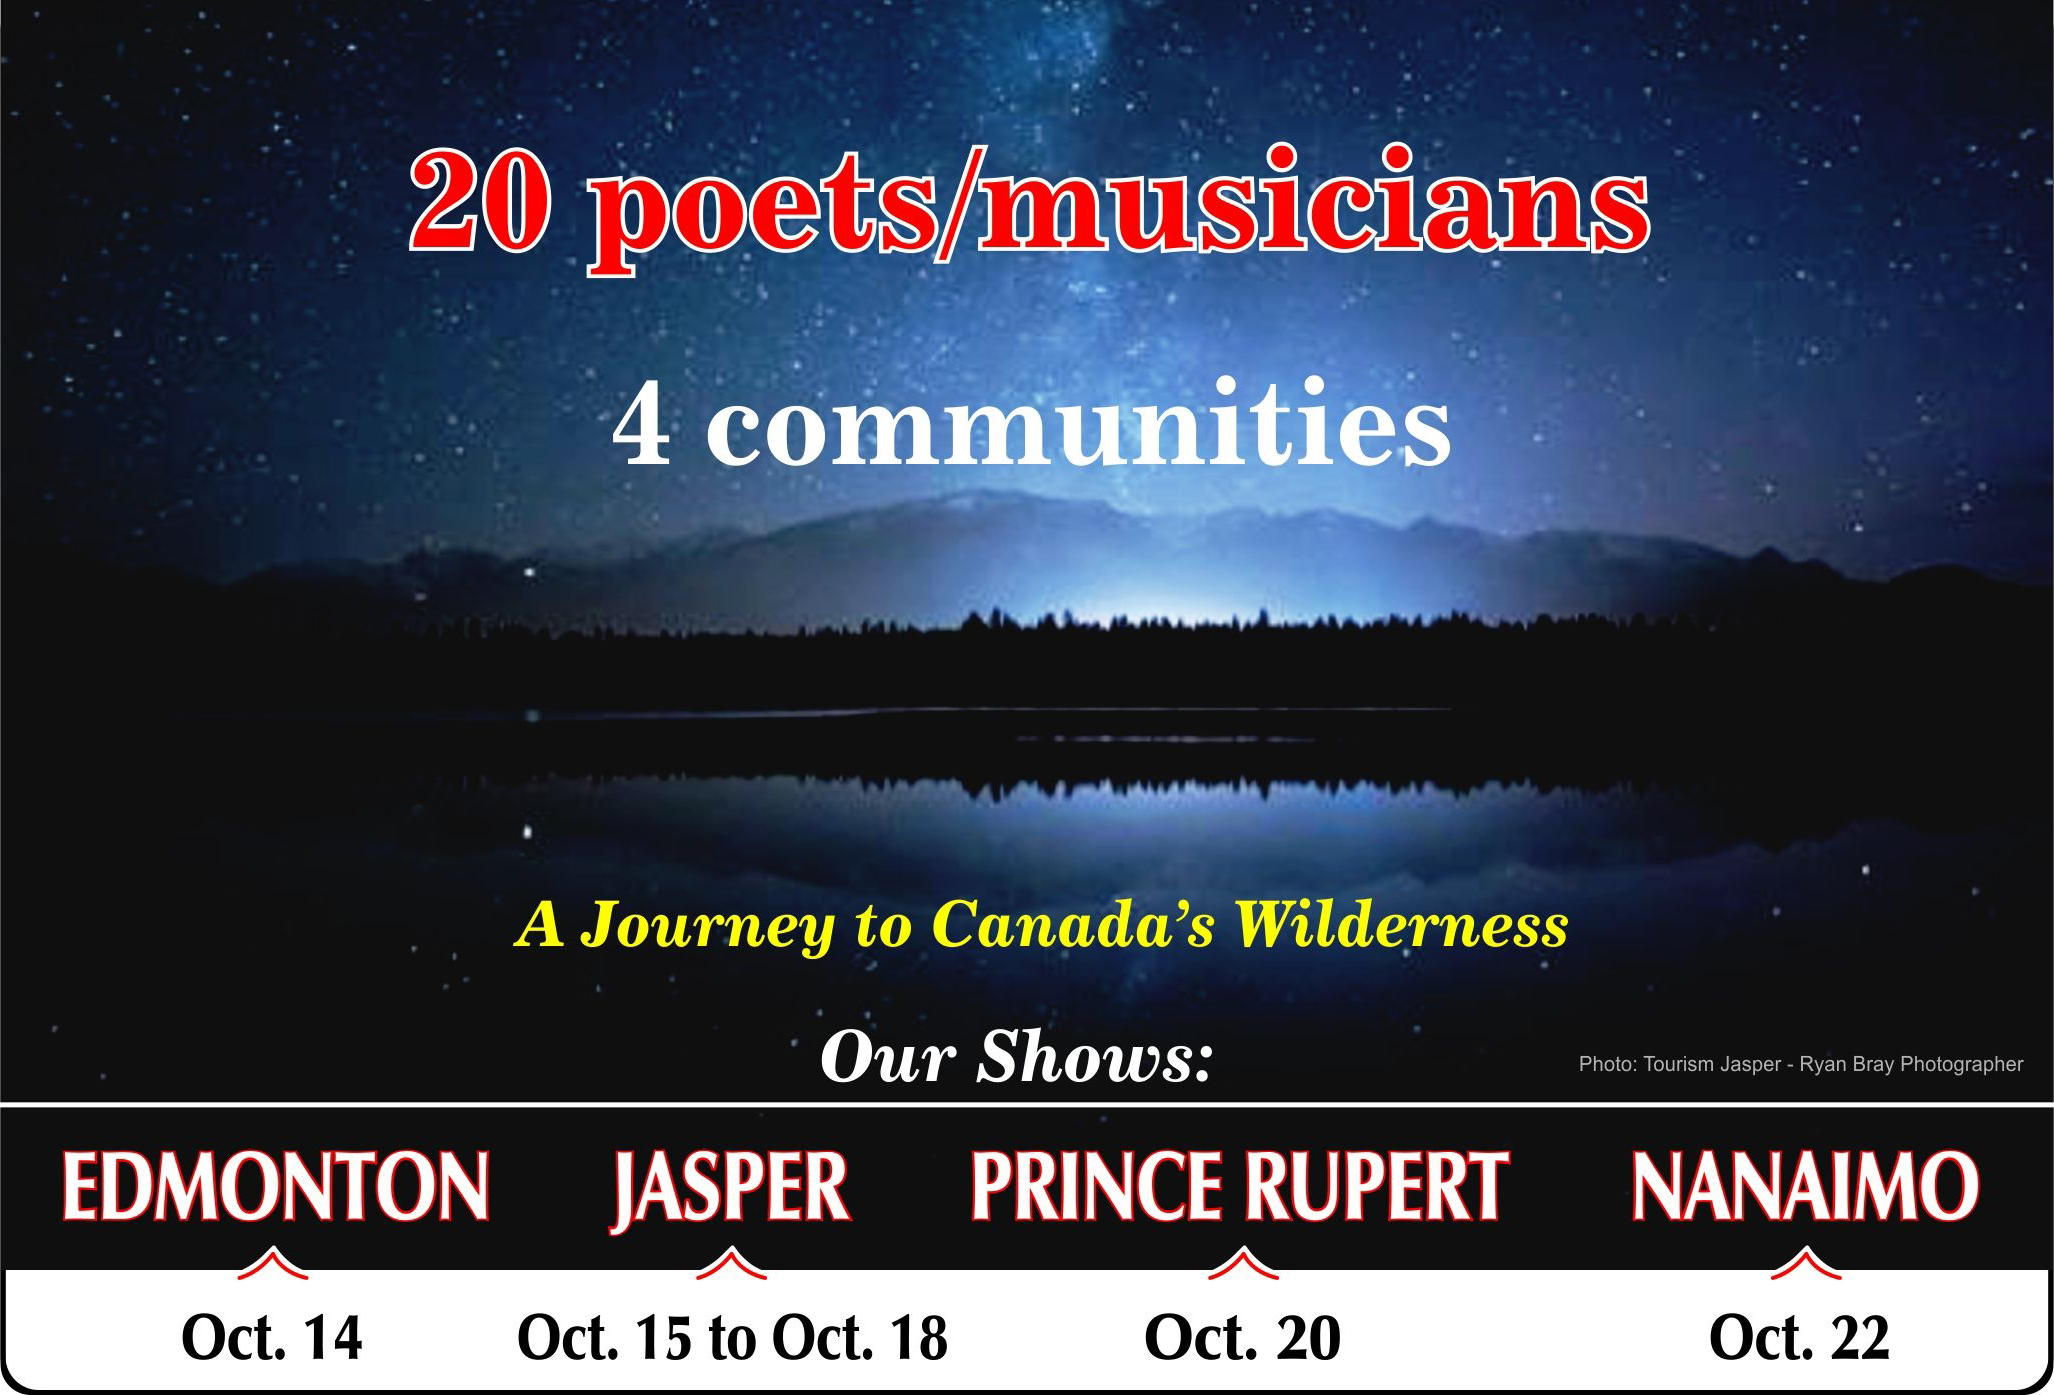 20 poets/musicians; 4 communities; A journey to Canada's wilderness. October 14-22 Edmonton-Jasper-Prince Rupert-Nanaimo